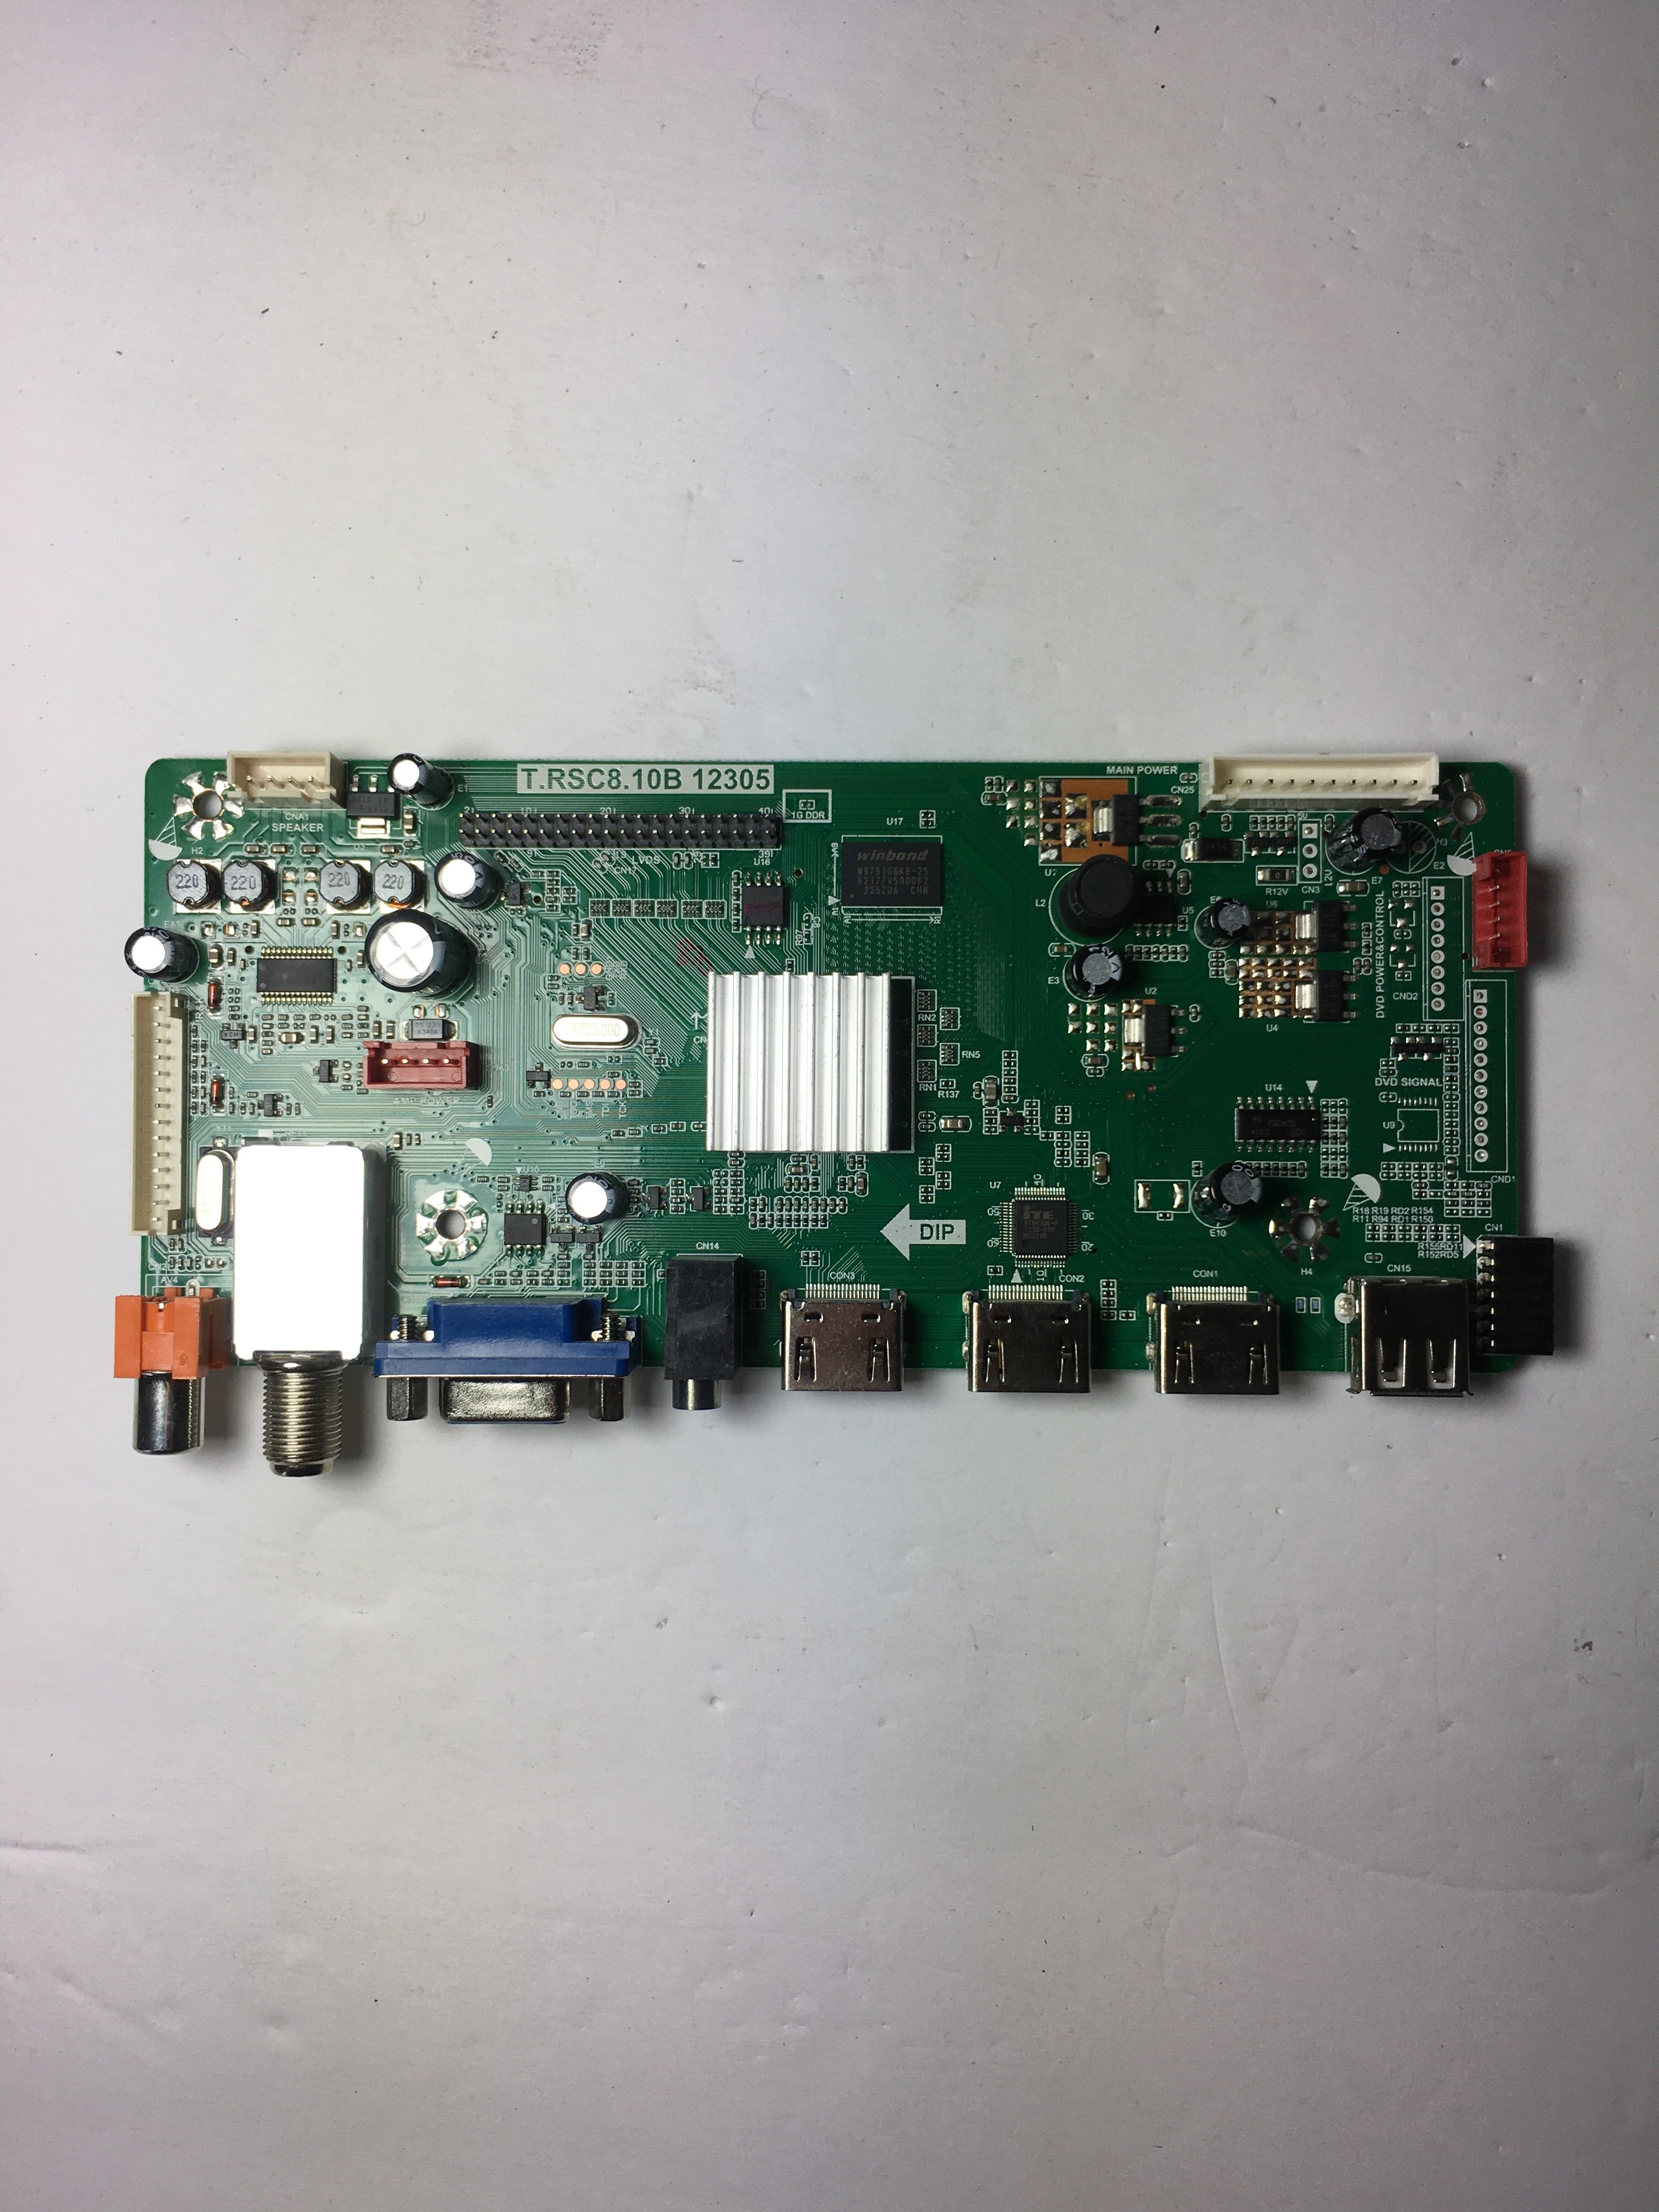 Sceptre A12092412 (T.RSC8.10B 12305) Main Board for X322BV-HD